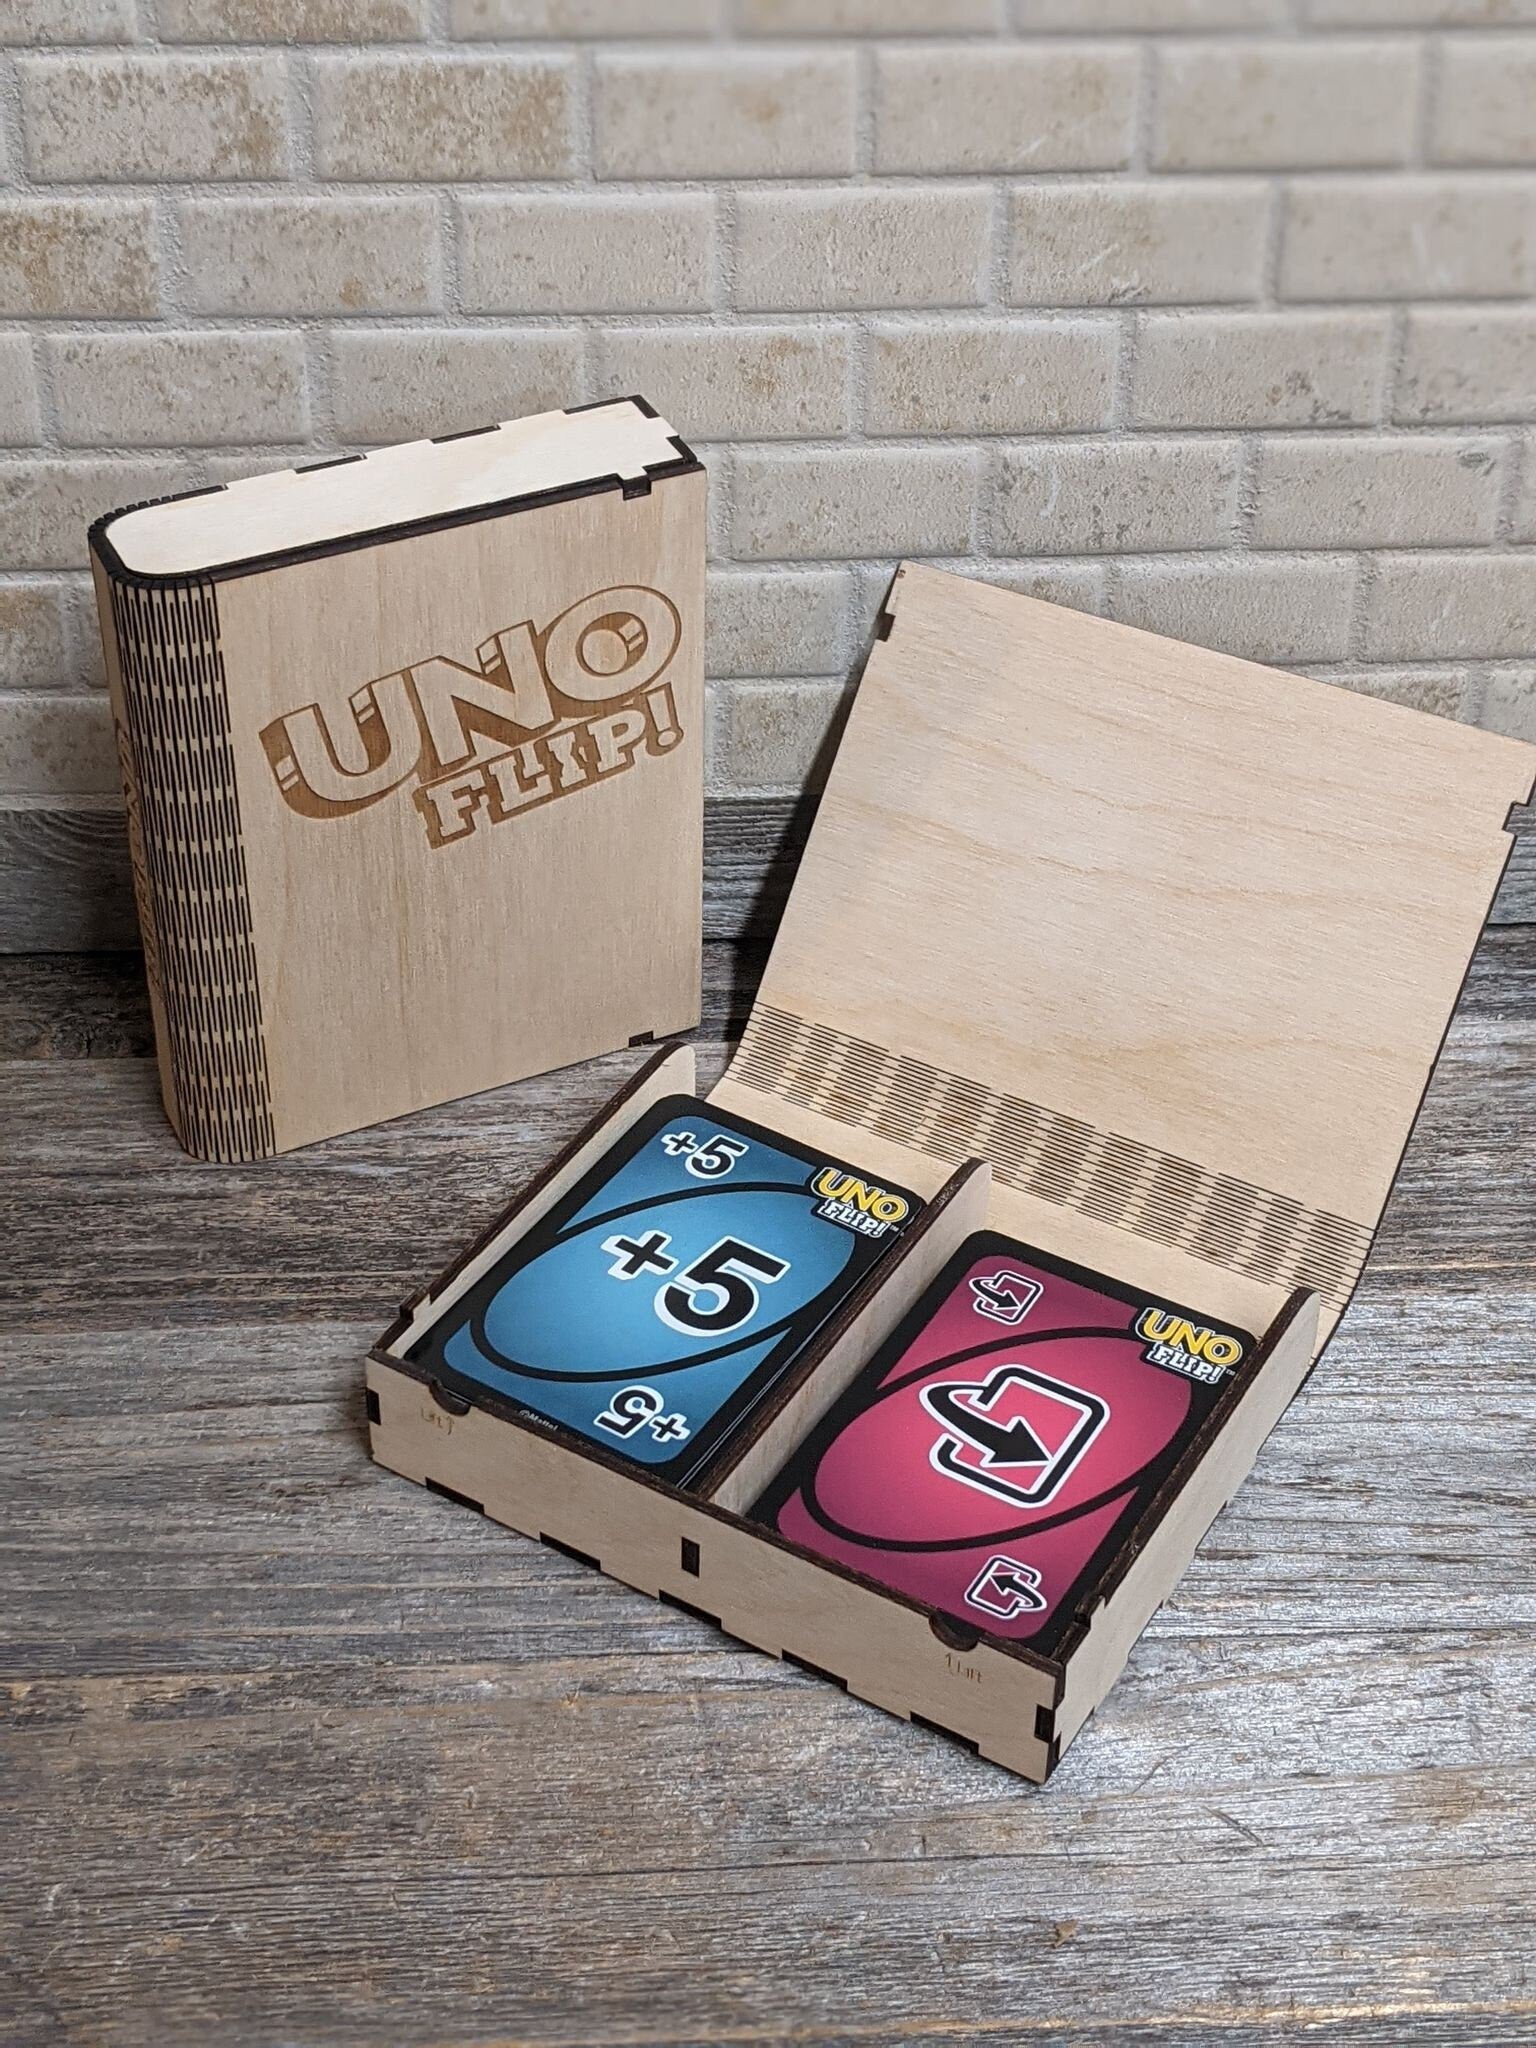 Smokers UNO Rule Card & Box Design